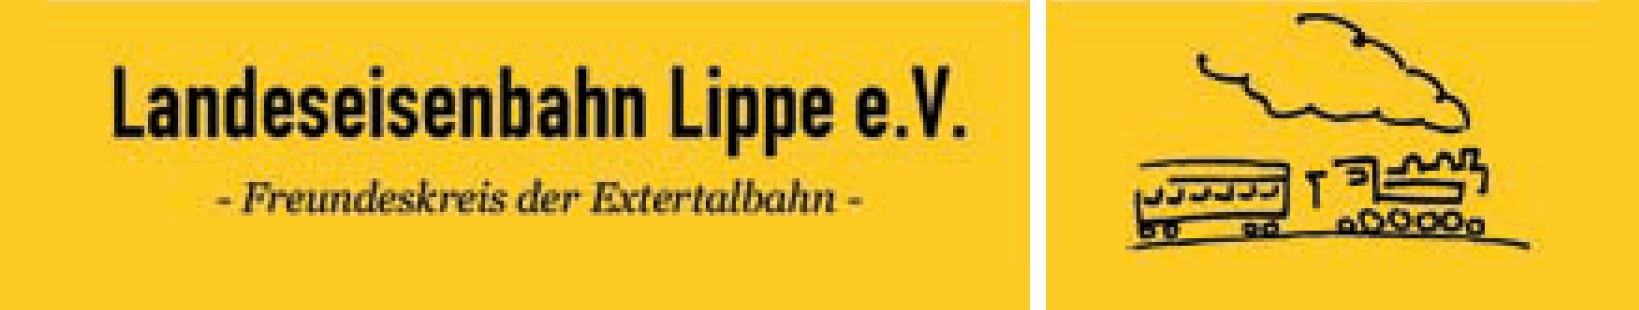 Landeseisenbahn Lippe e.V., Bild 1